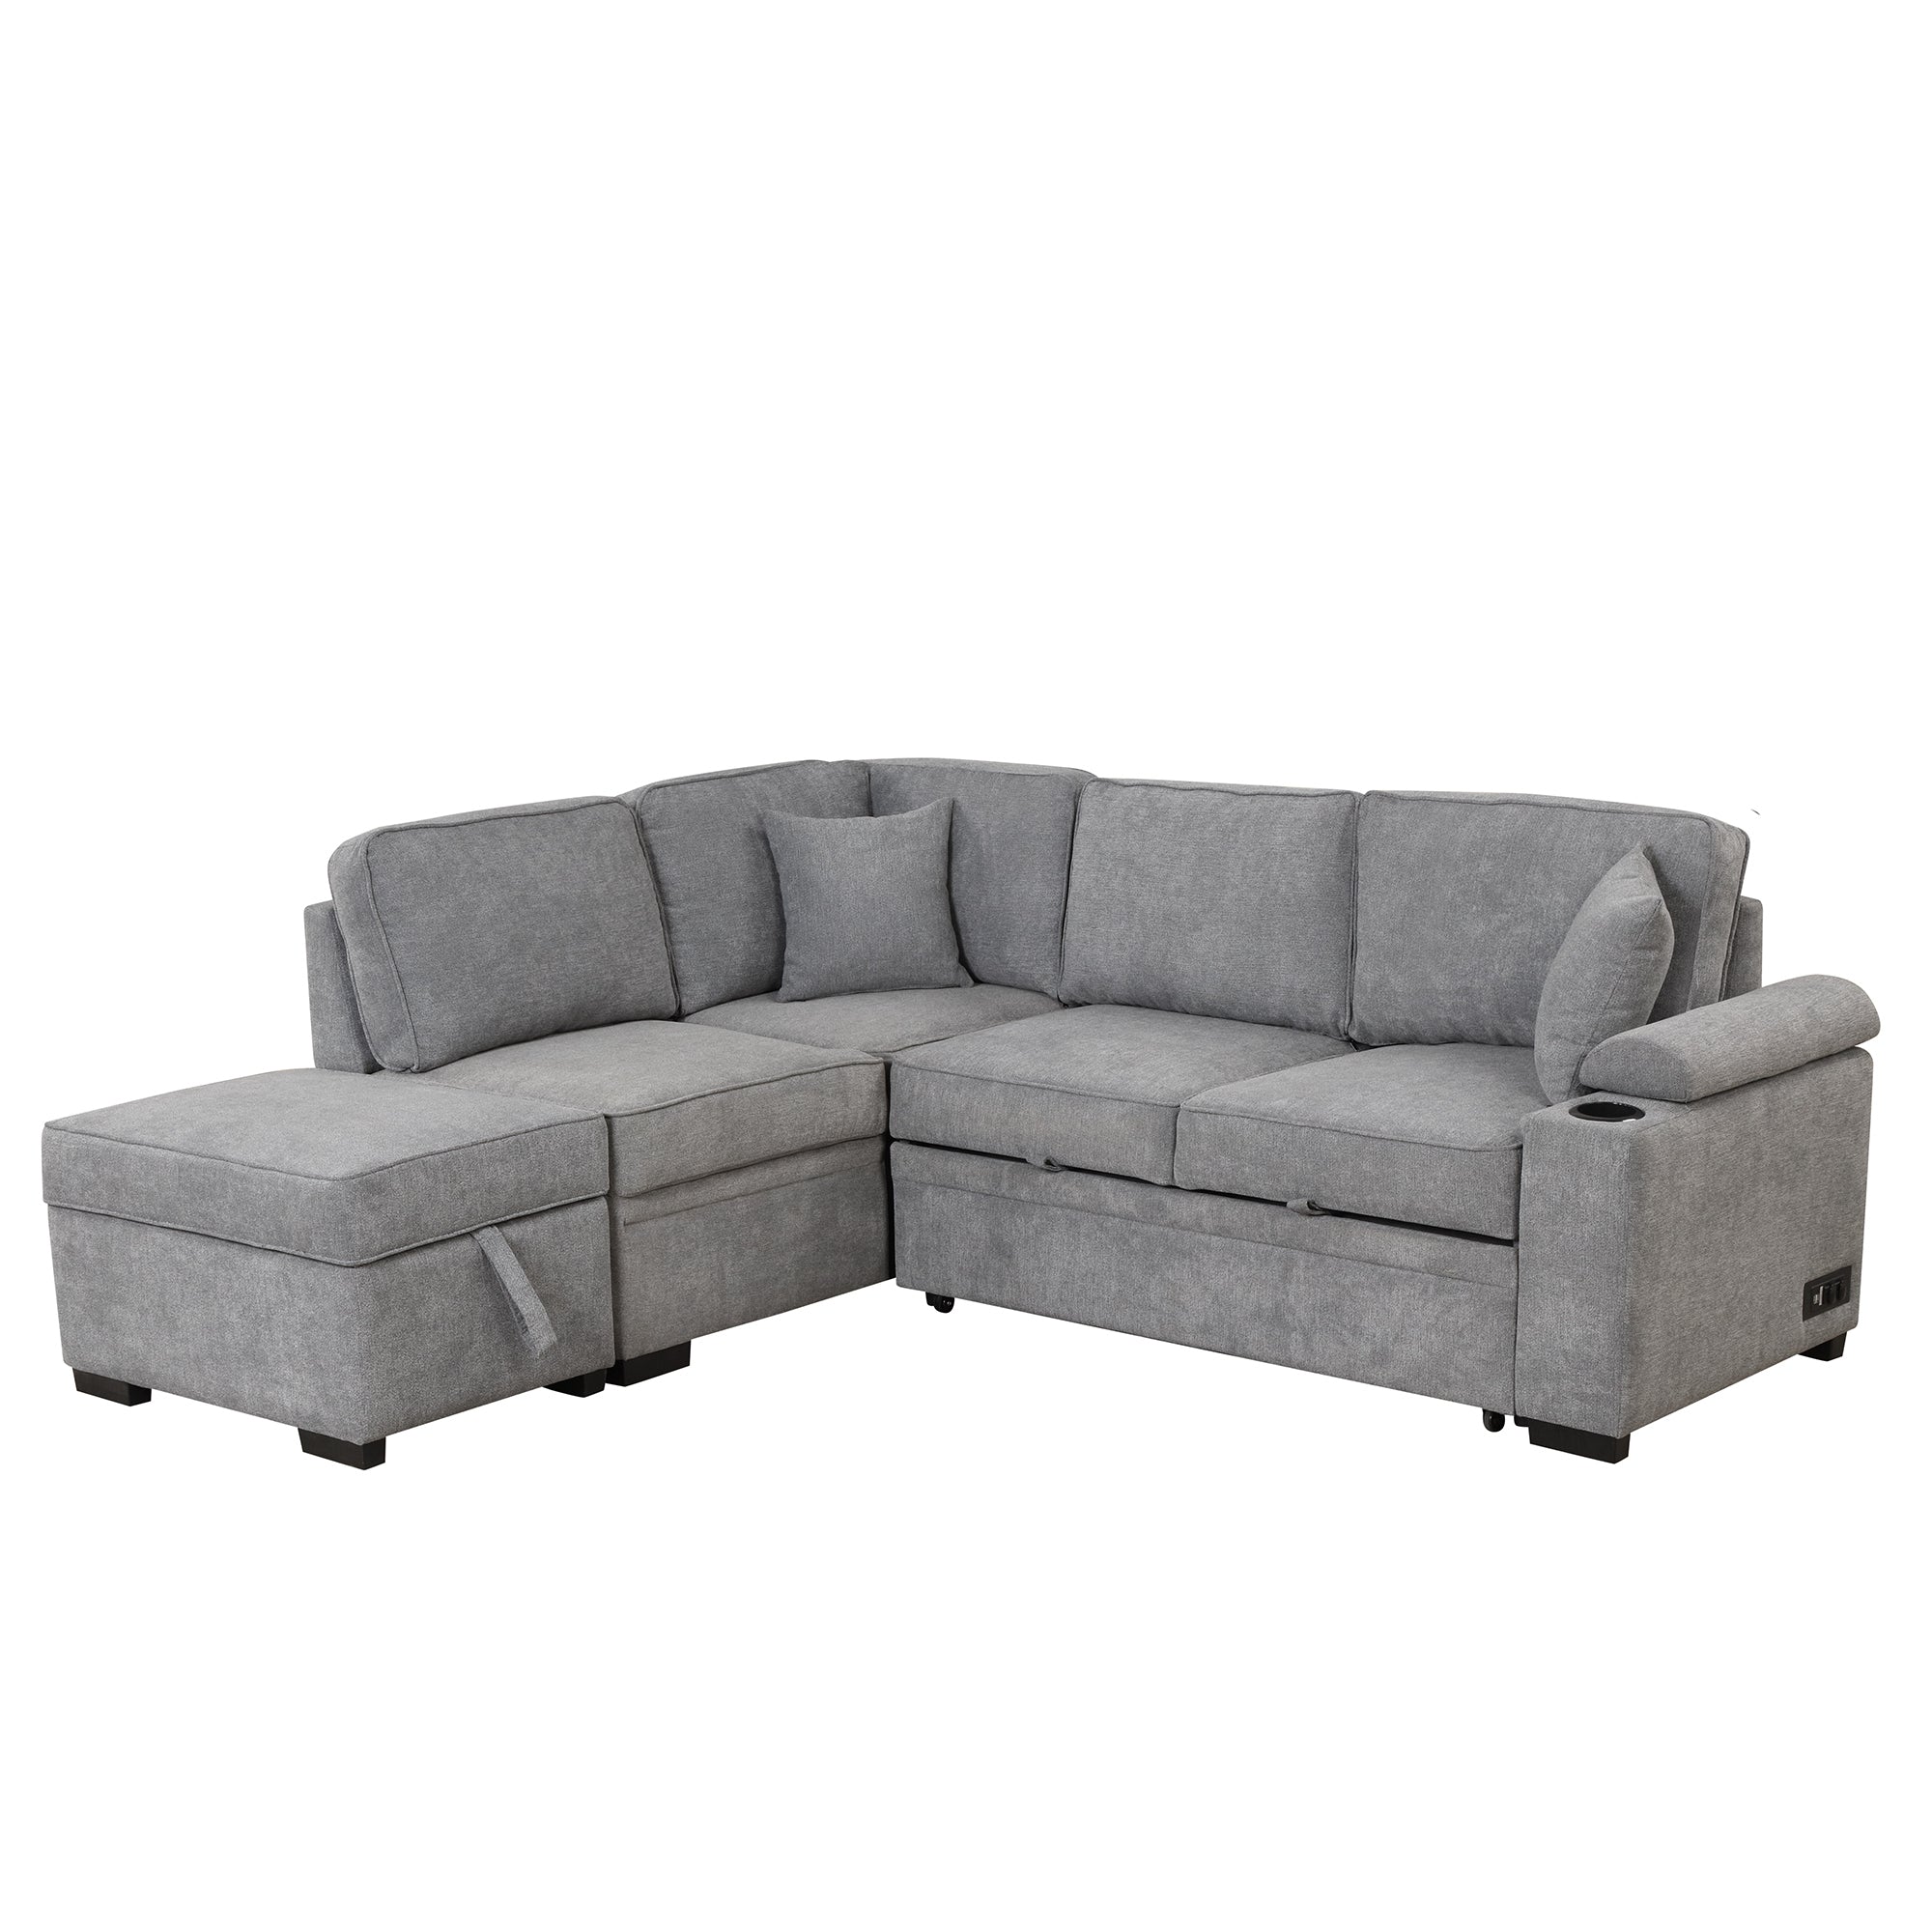 Gray L-Shape Sleeper Sofa w/ Storage Ottoman